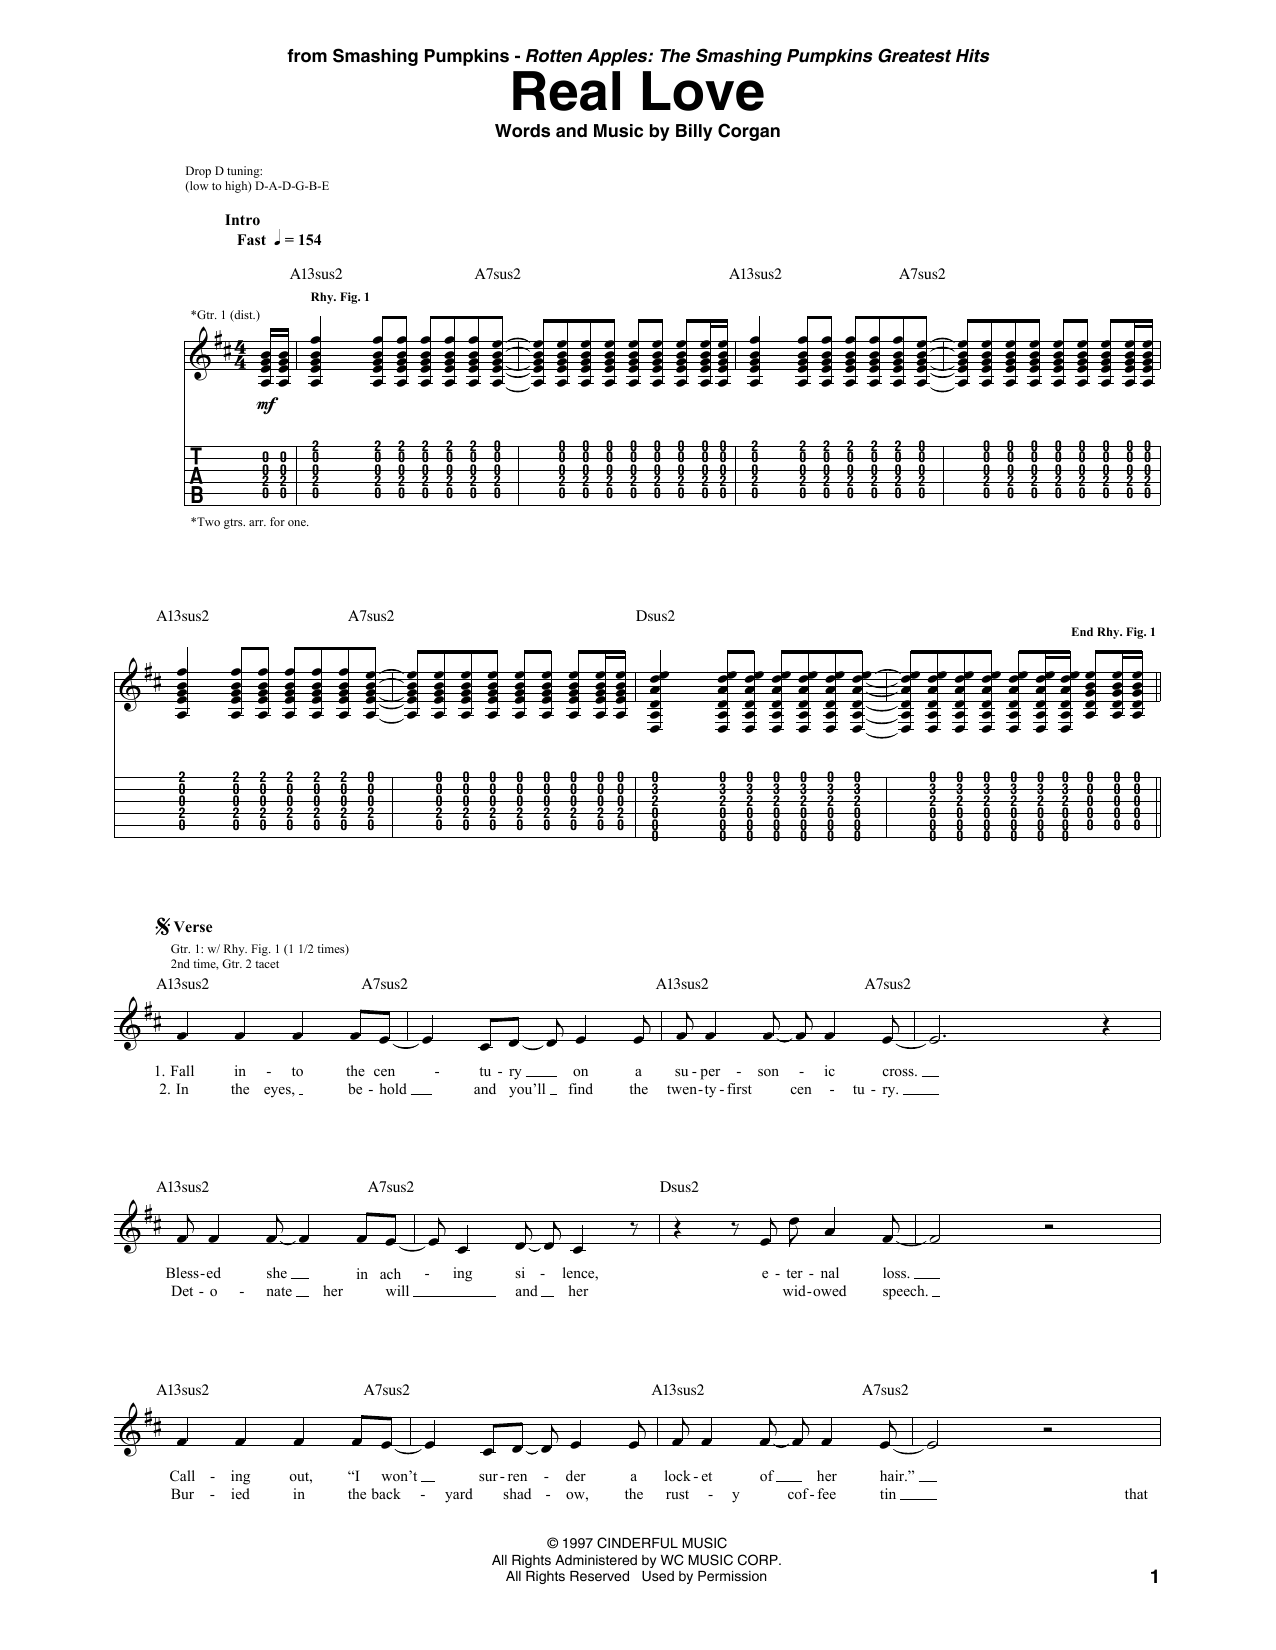 The Smashing Pumpkins Real Love Sheet Music Notes & Chords for Guitar Tab - Download or Print PDF